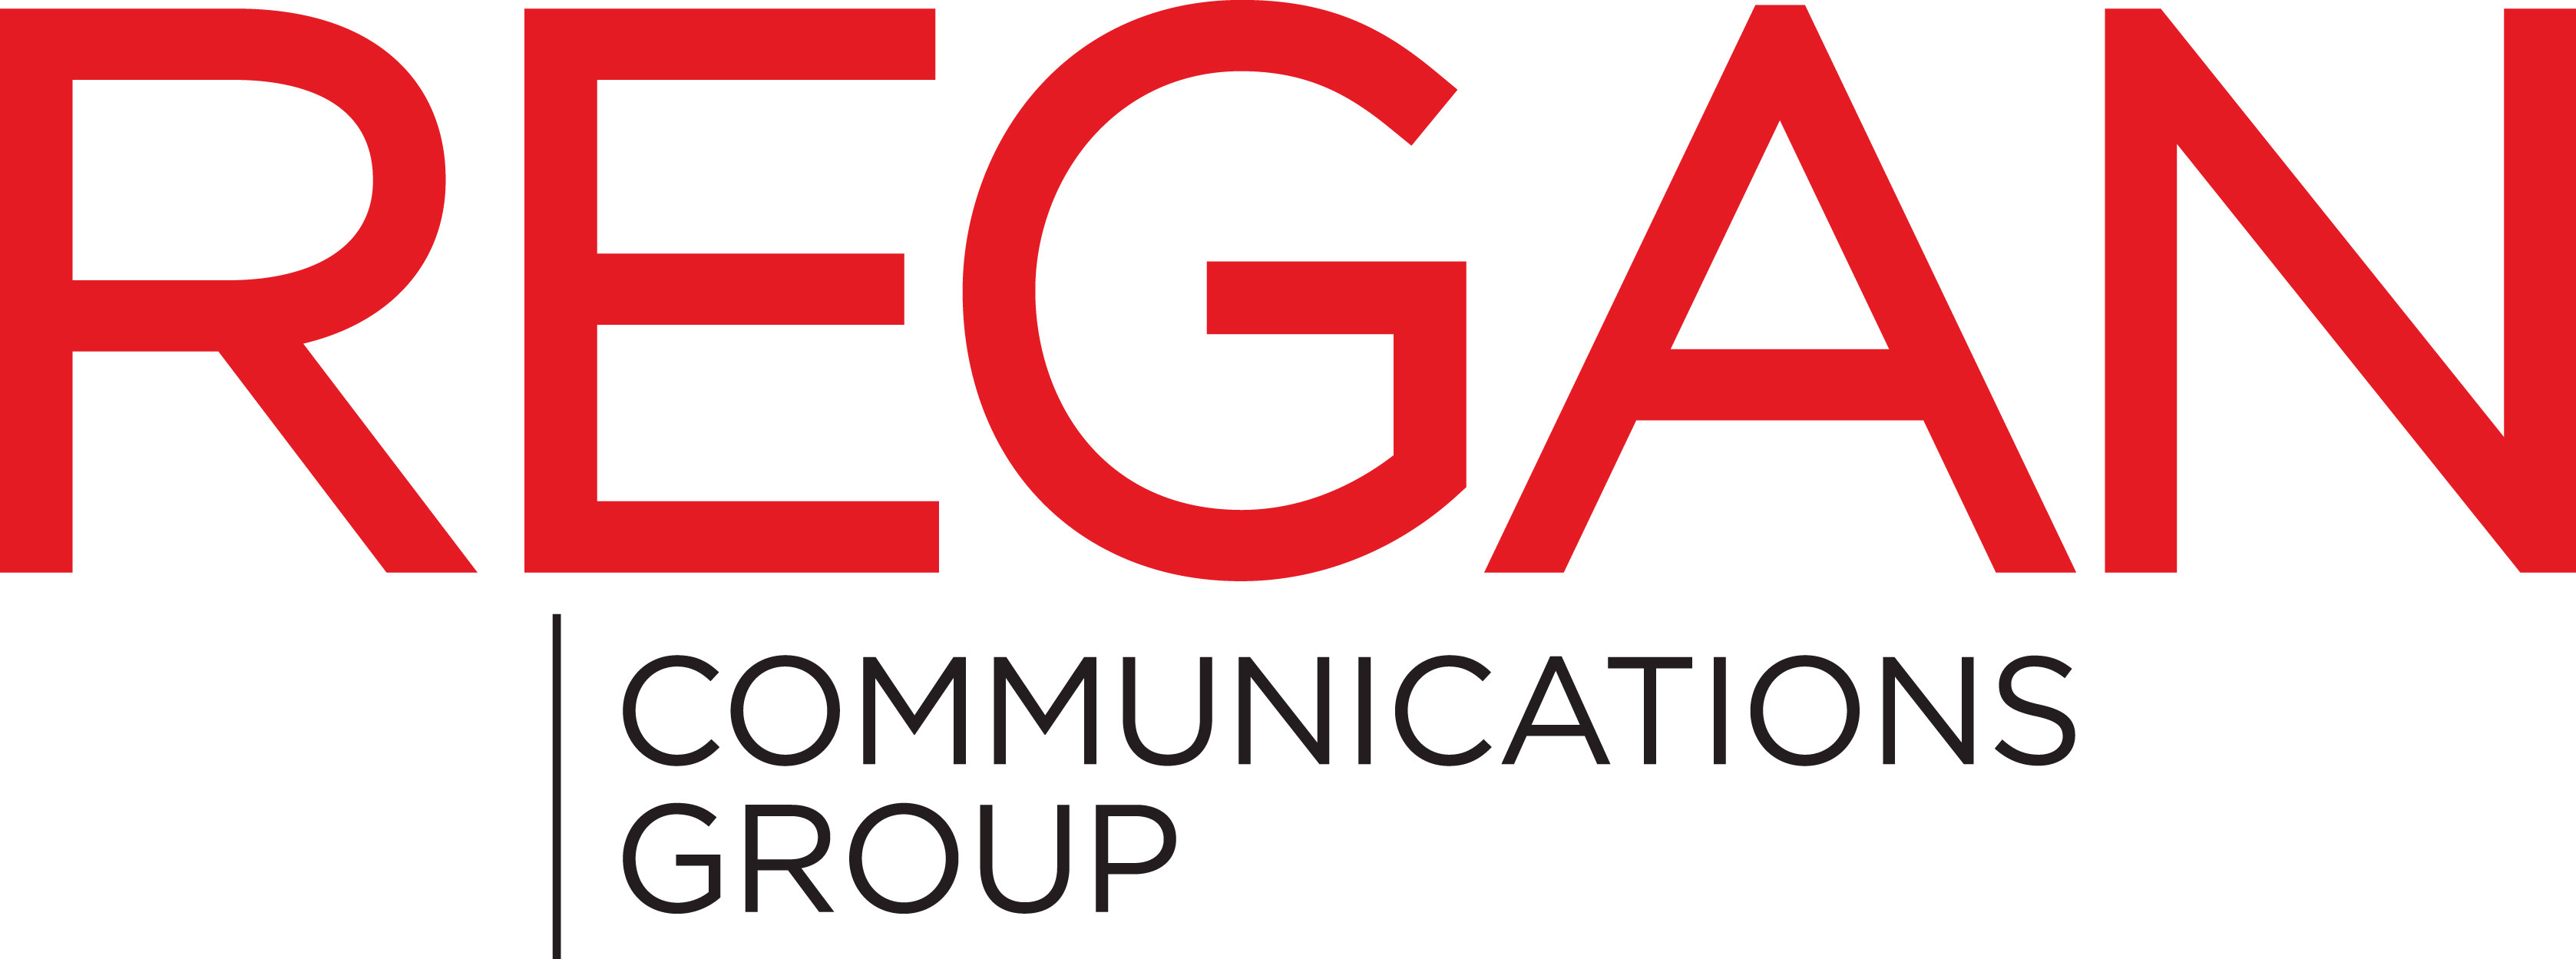  Best PR Firm Logo: Regan Communications Group